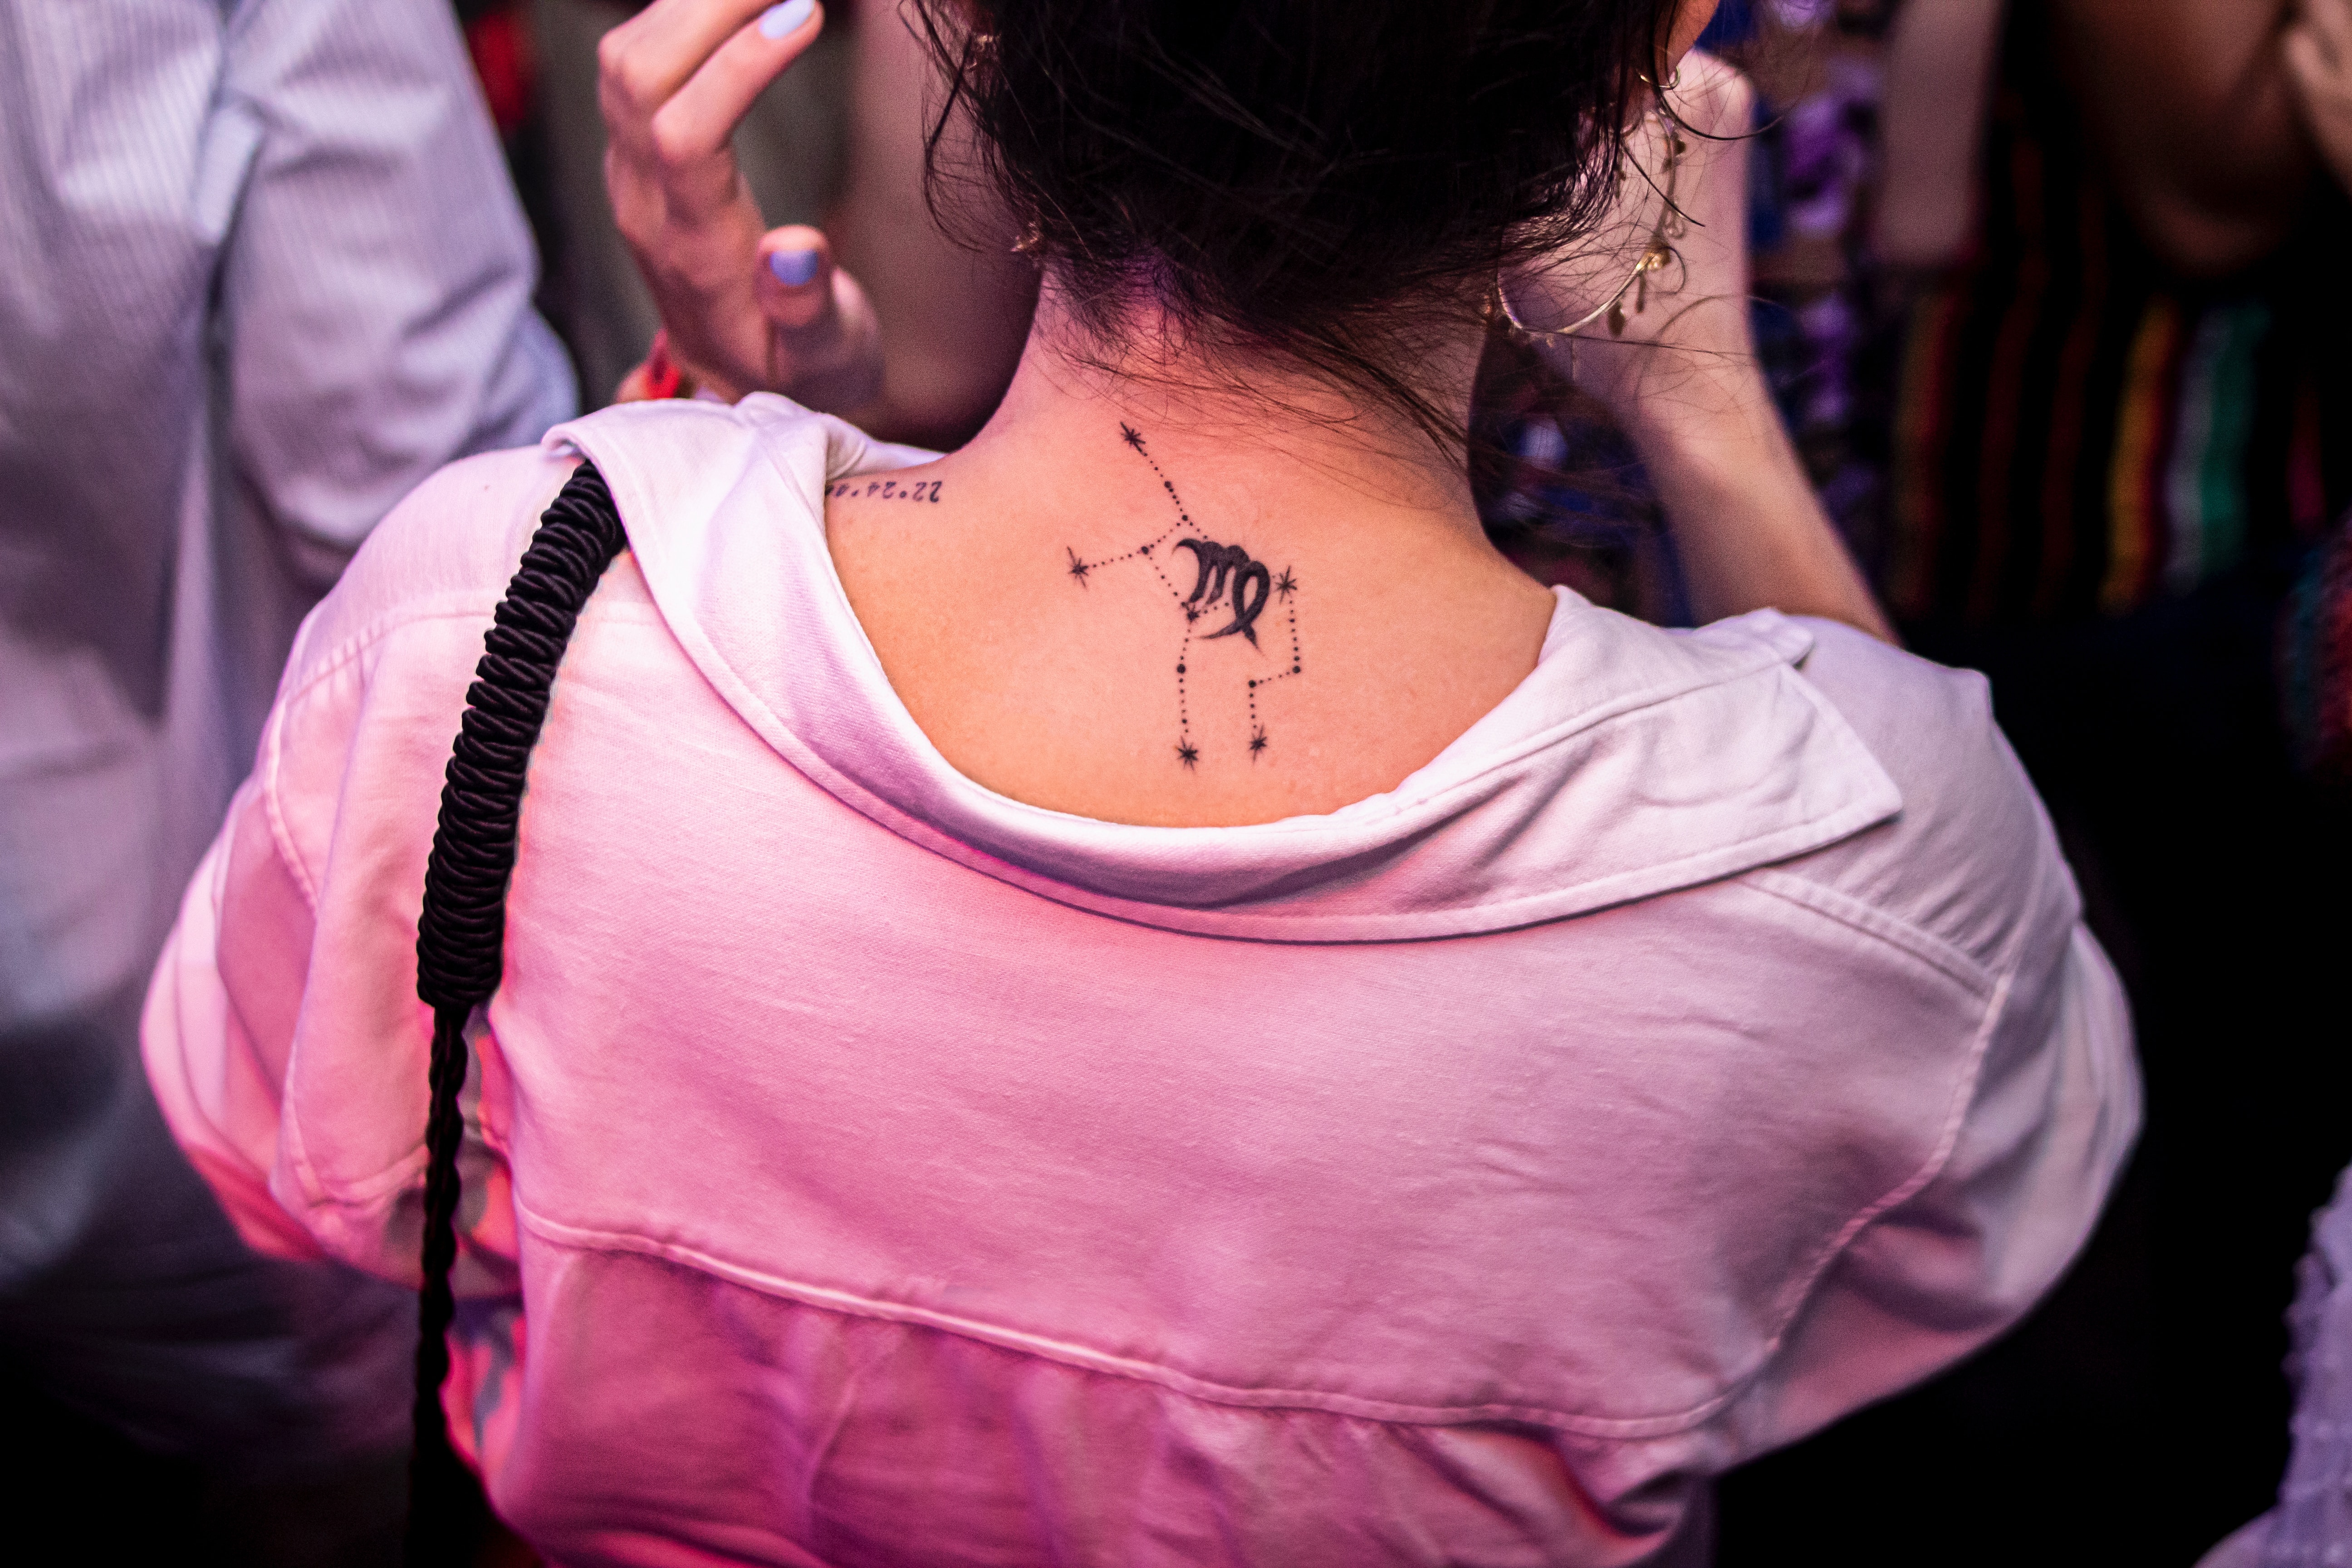 Woman with a zodiac tattoo. | Source: Unsplash